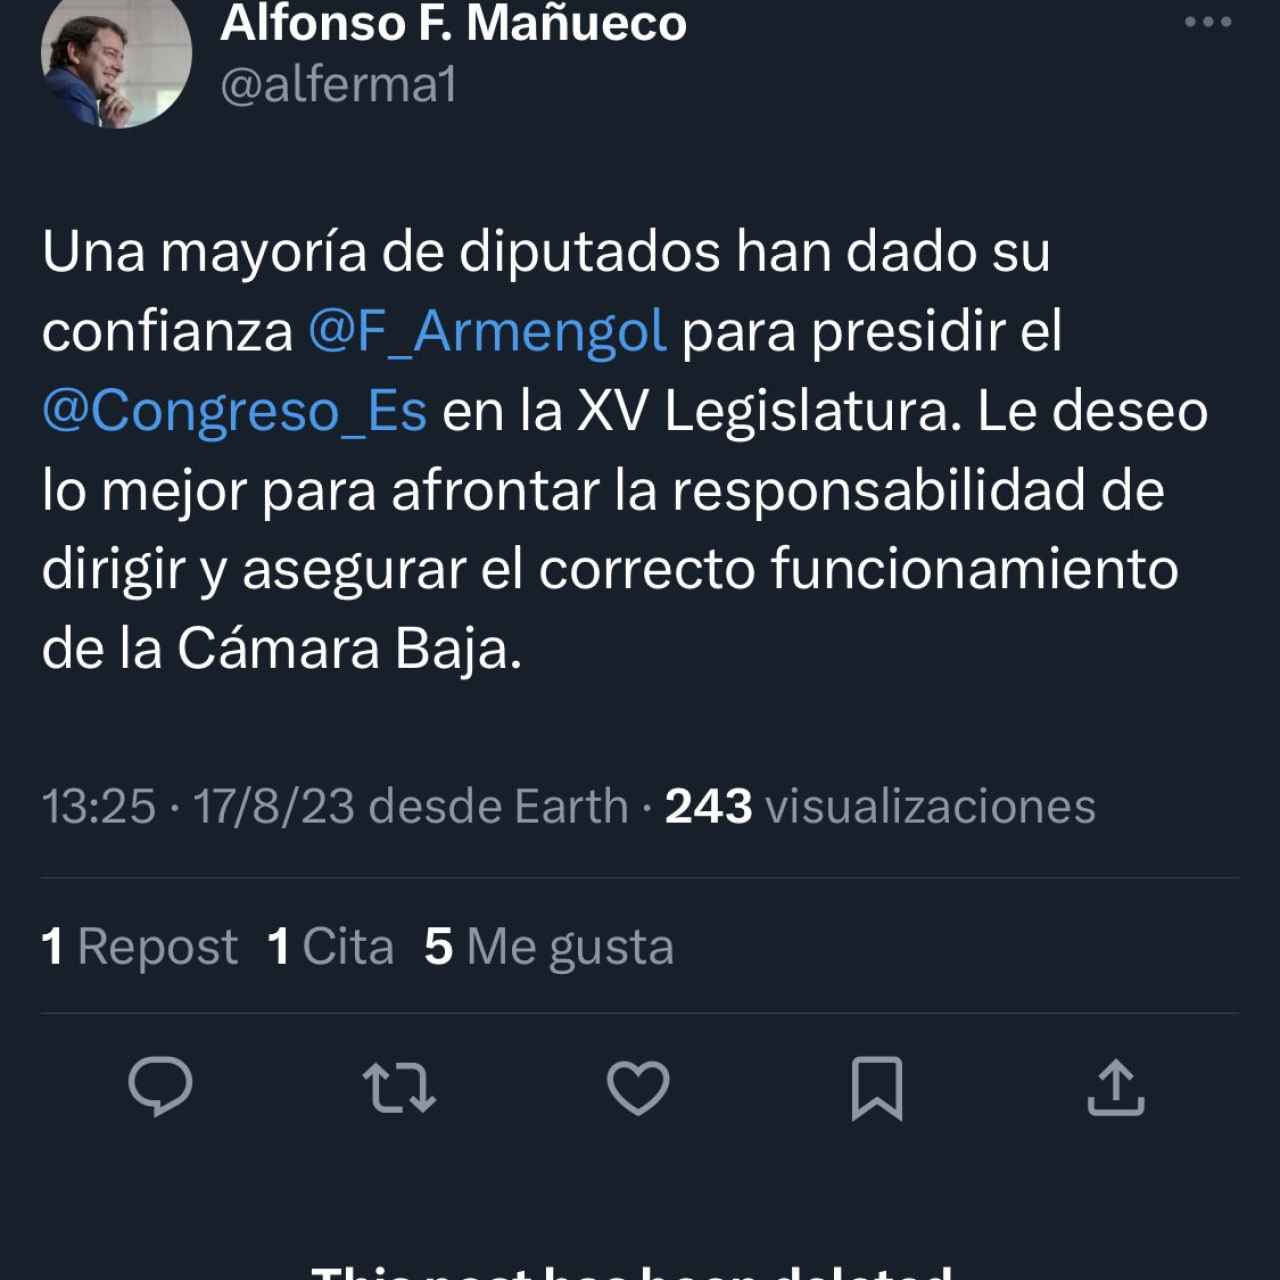 Tuit de Mañueco felicitando a Armengol